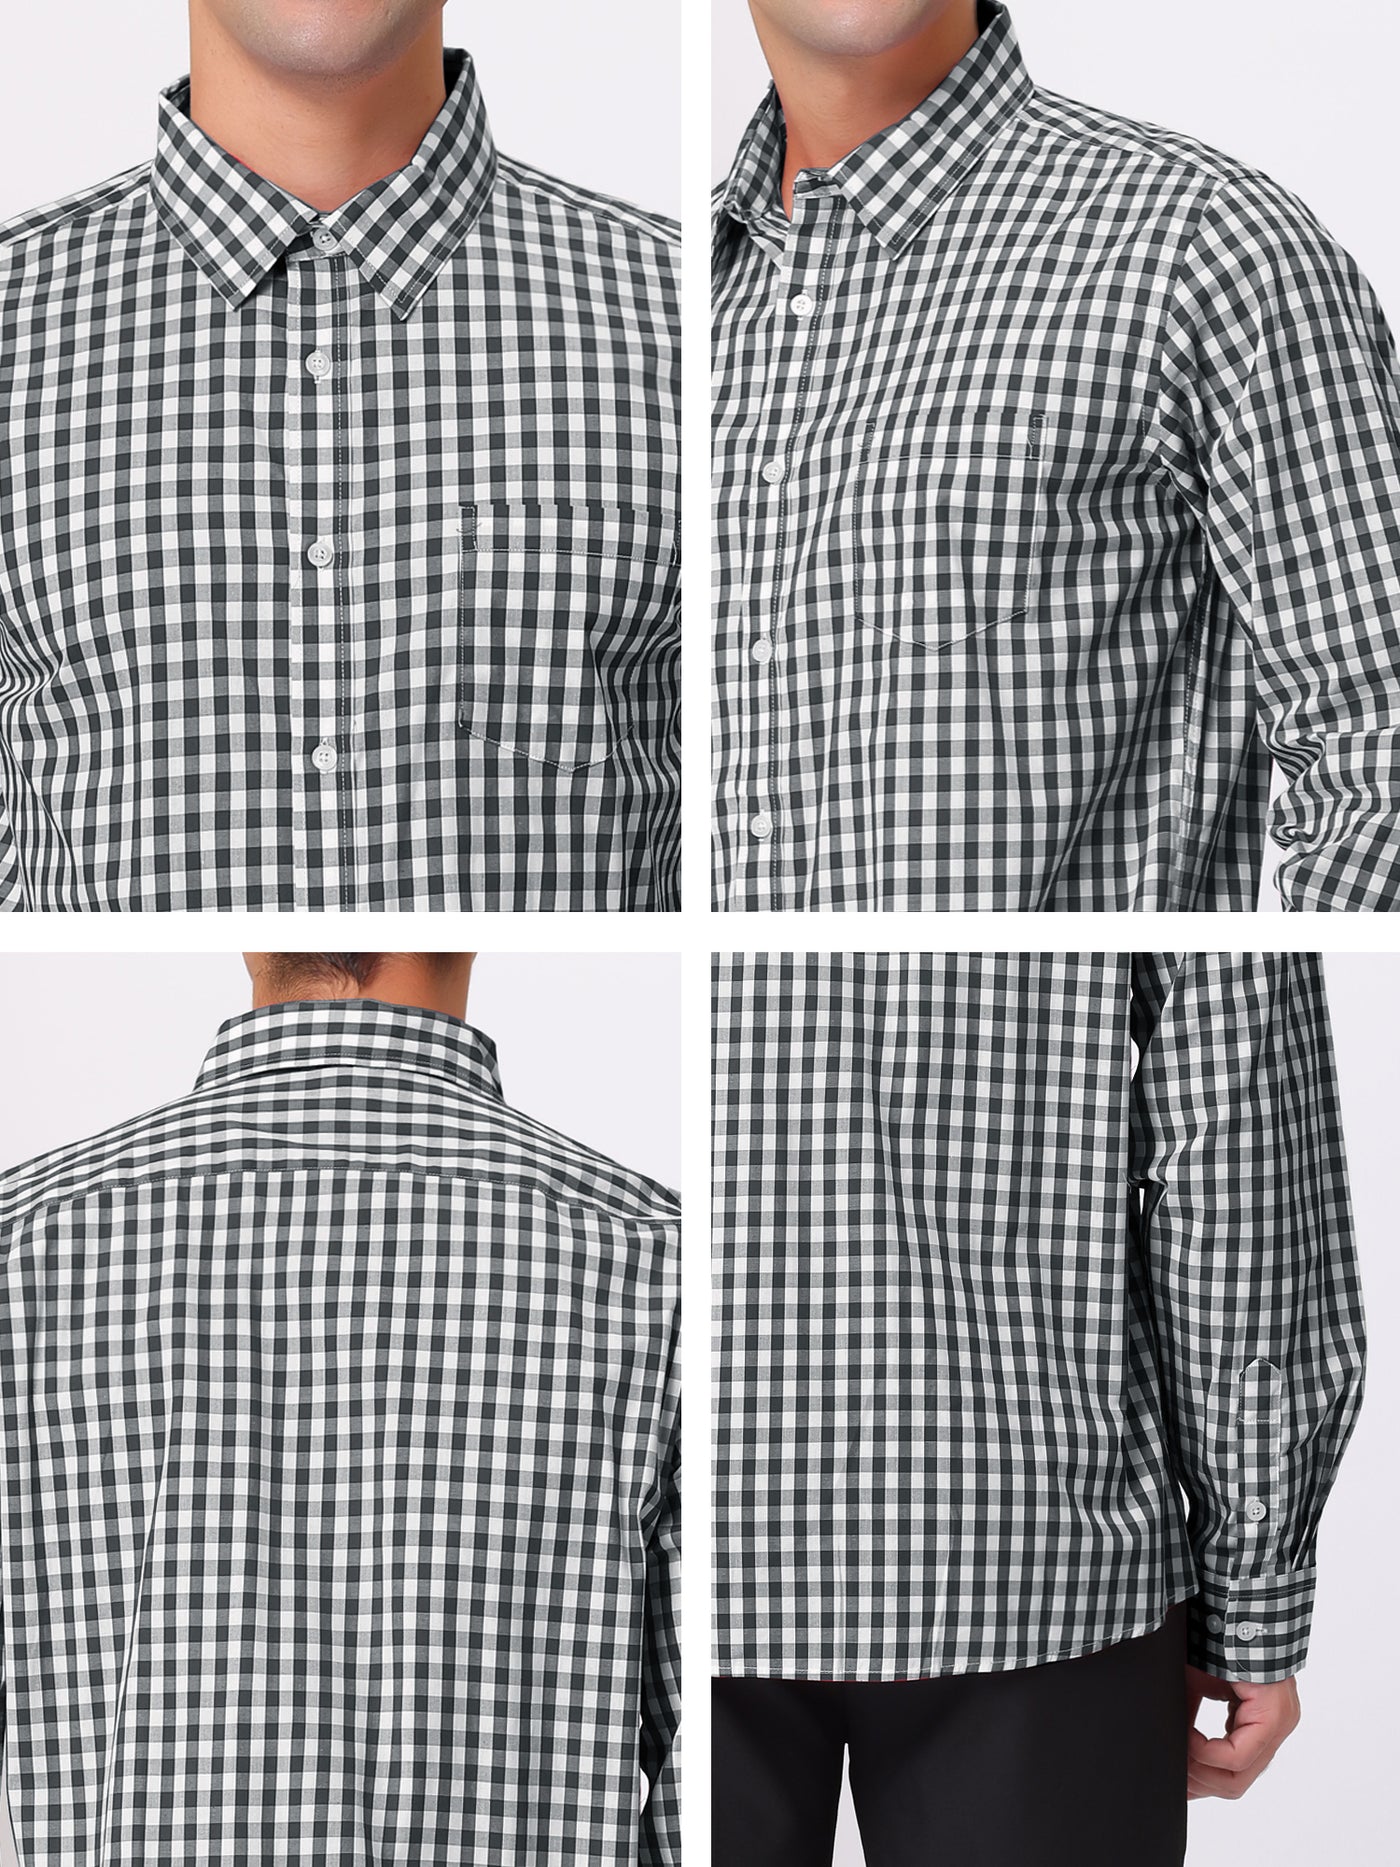 Bublédon Men's Plaid Button Down Long Sleeves Dress Checkered Shirts